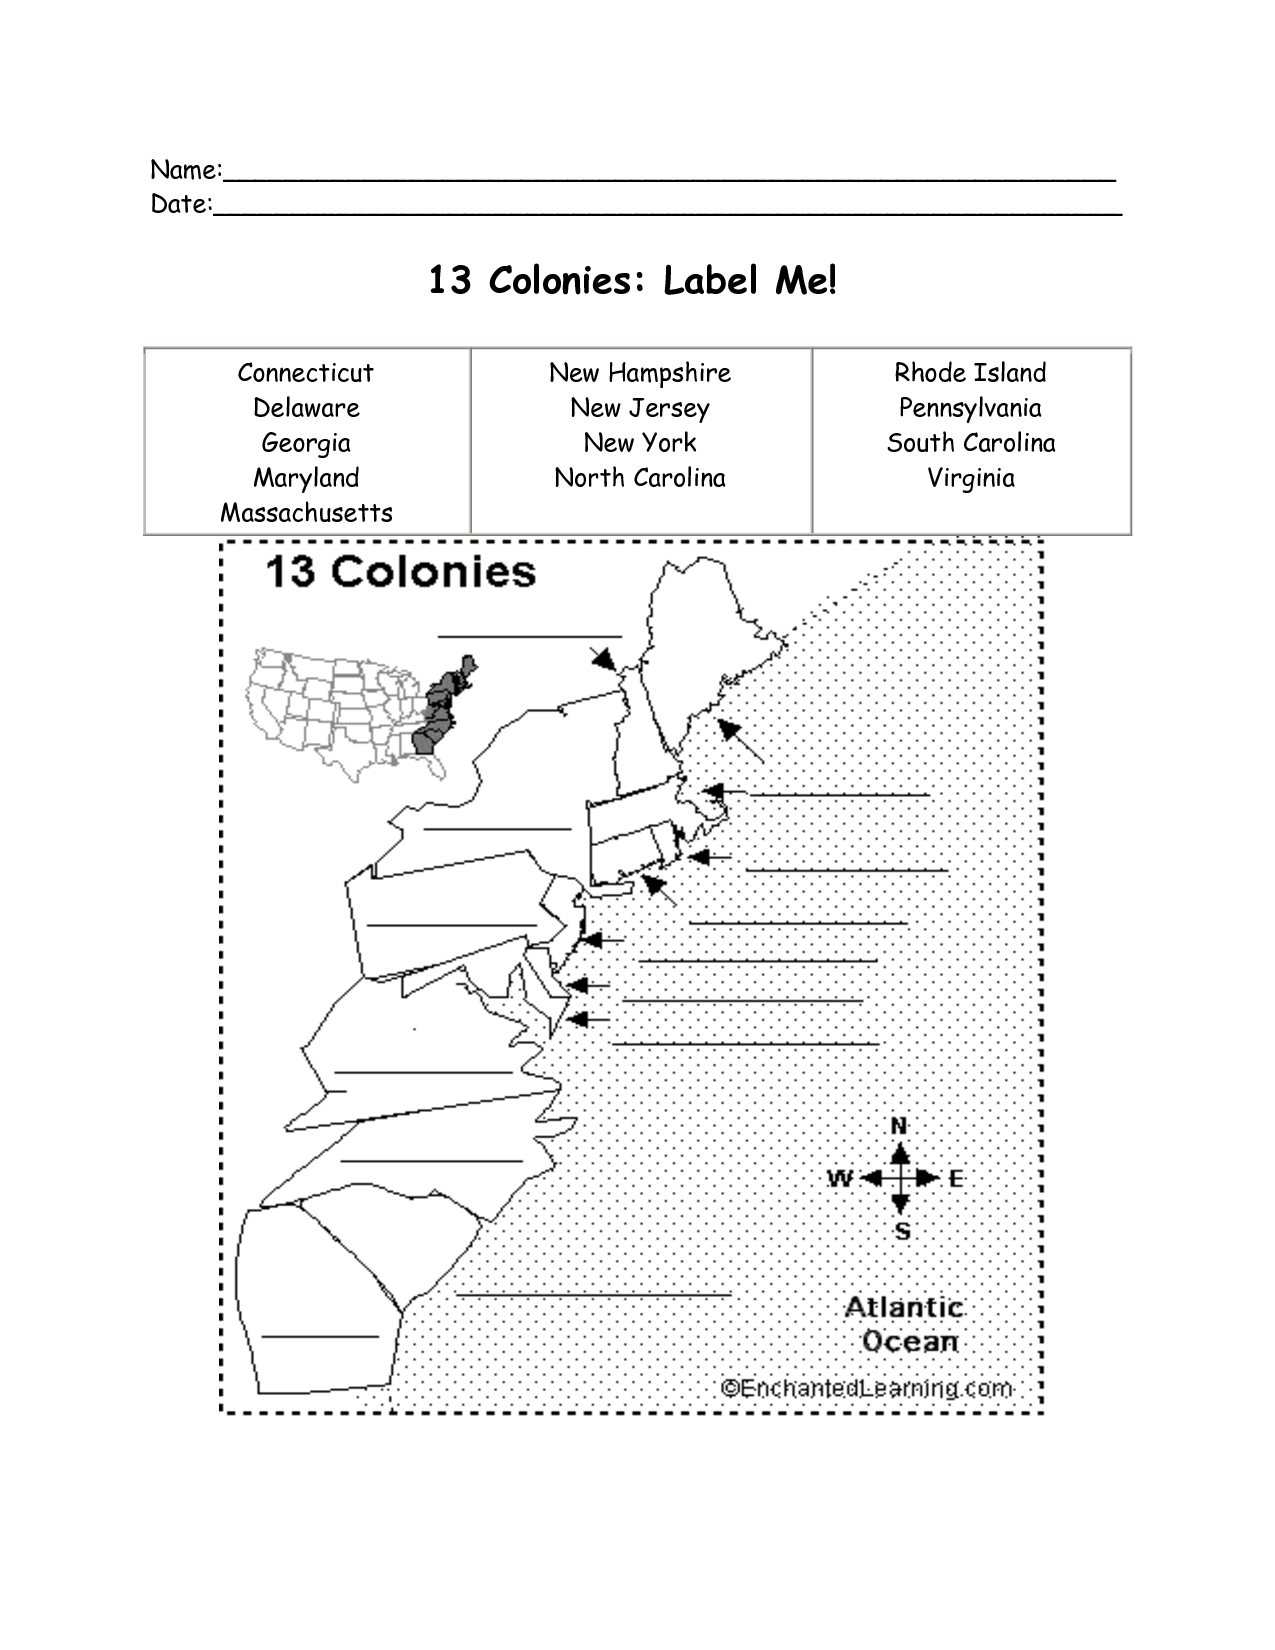 34-13-colonies-map-worksheet-answers-worksheet-database-source-2020